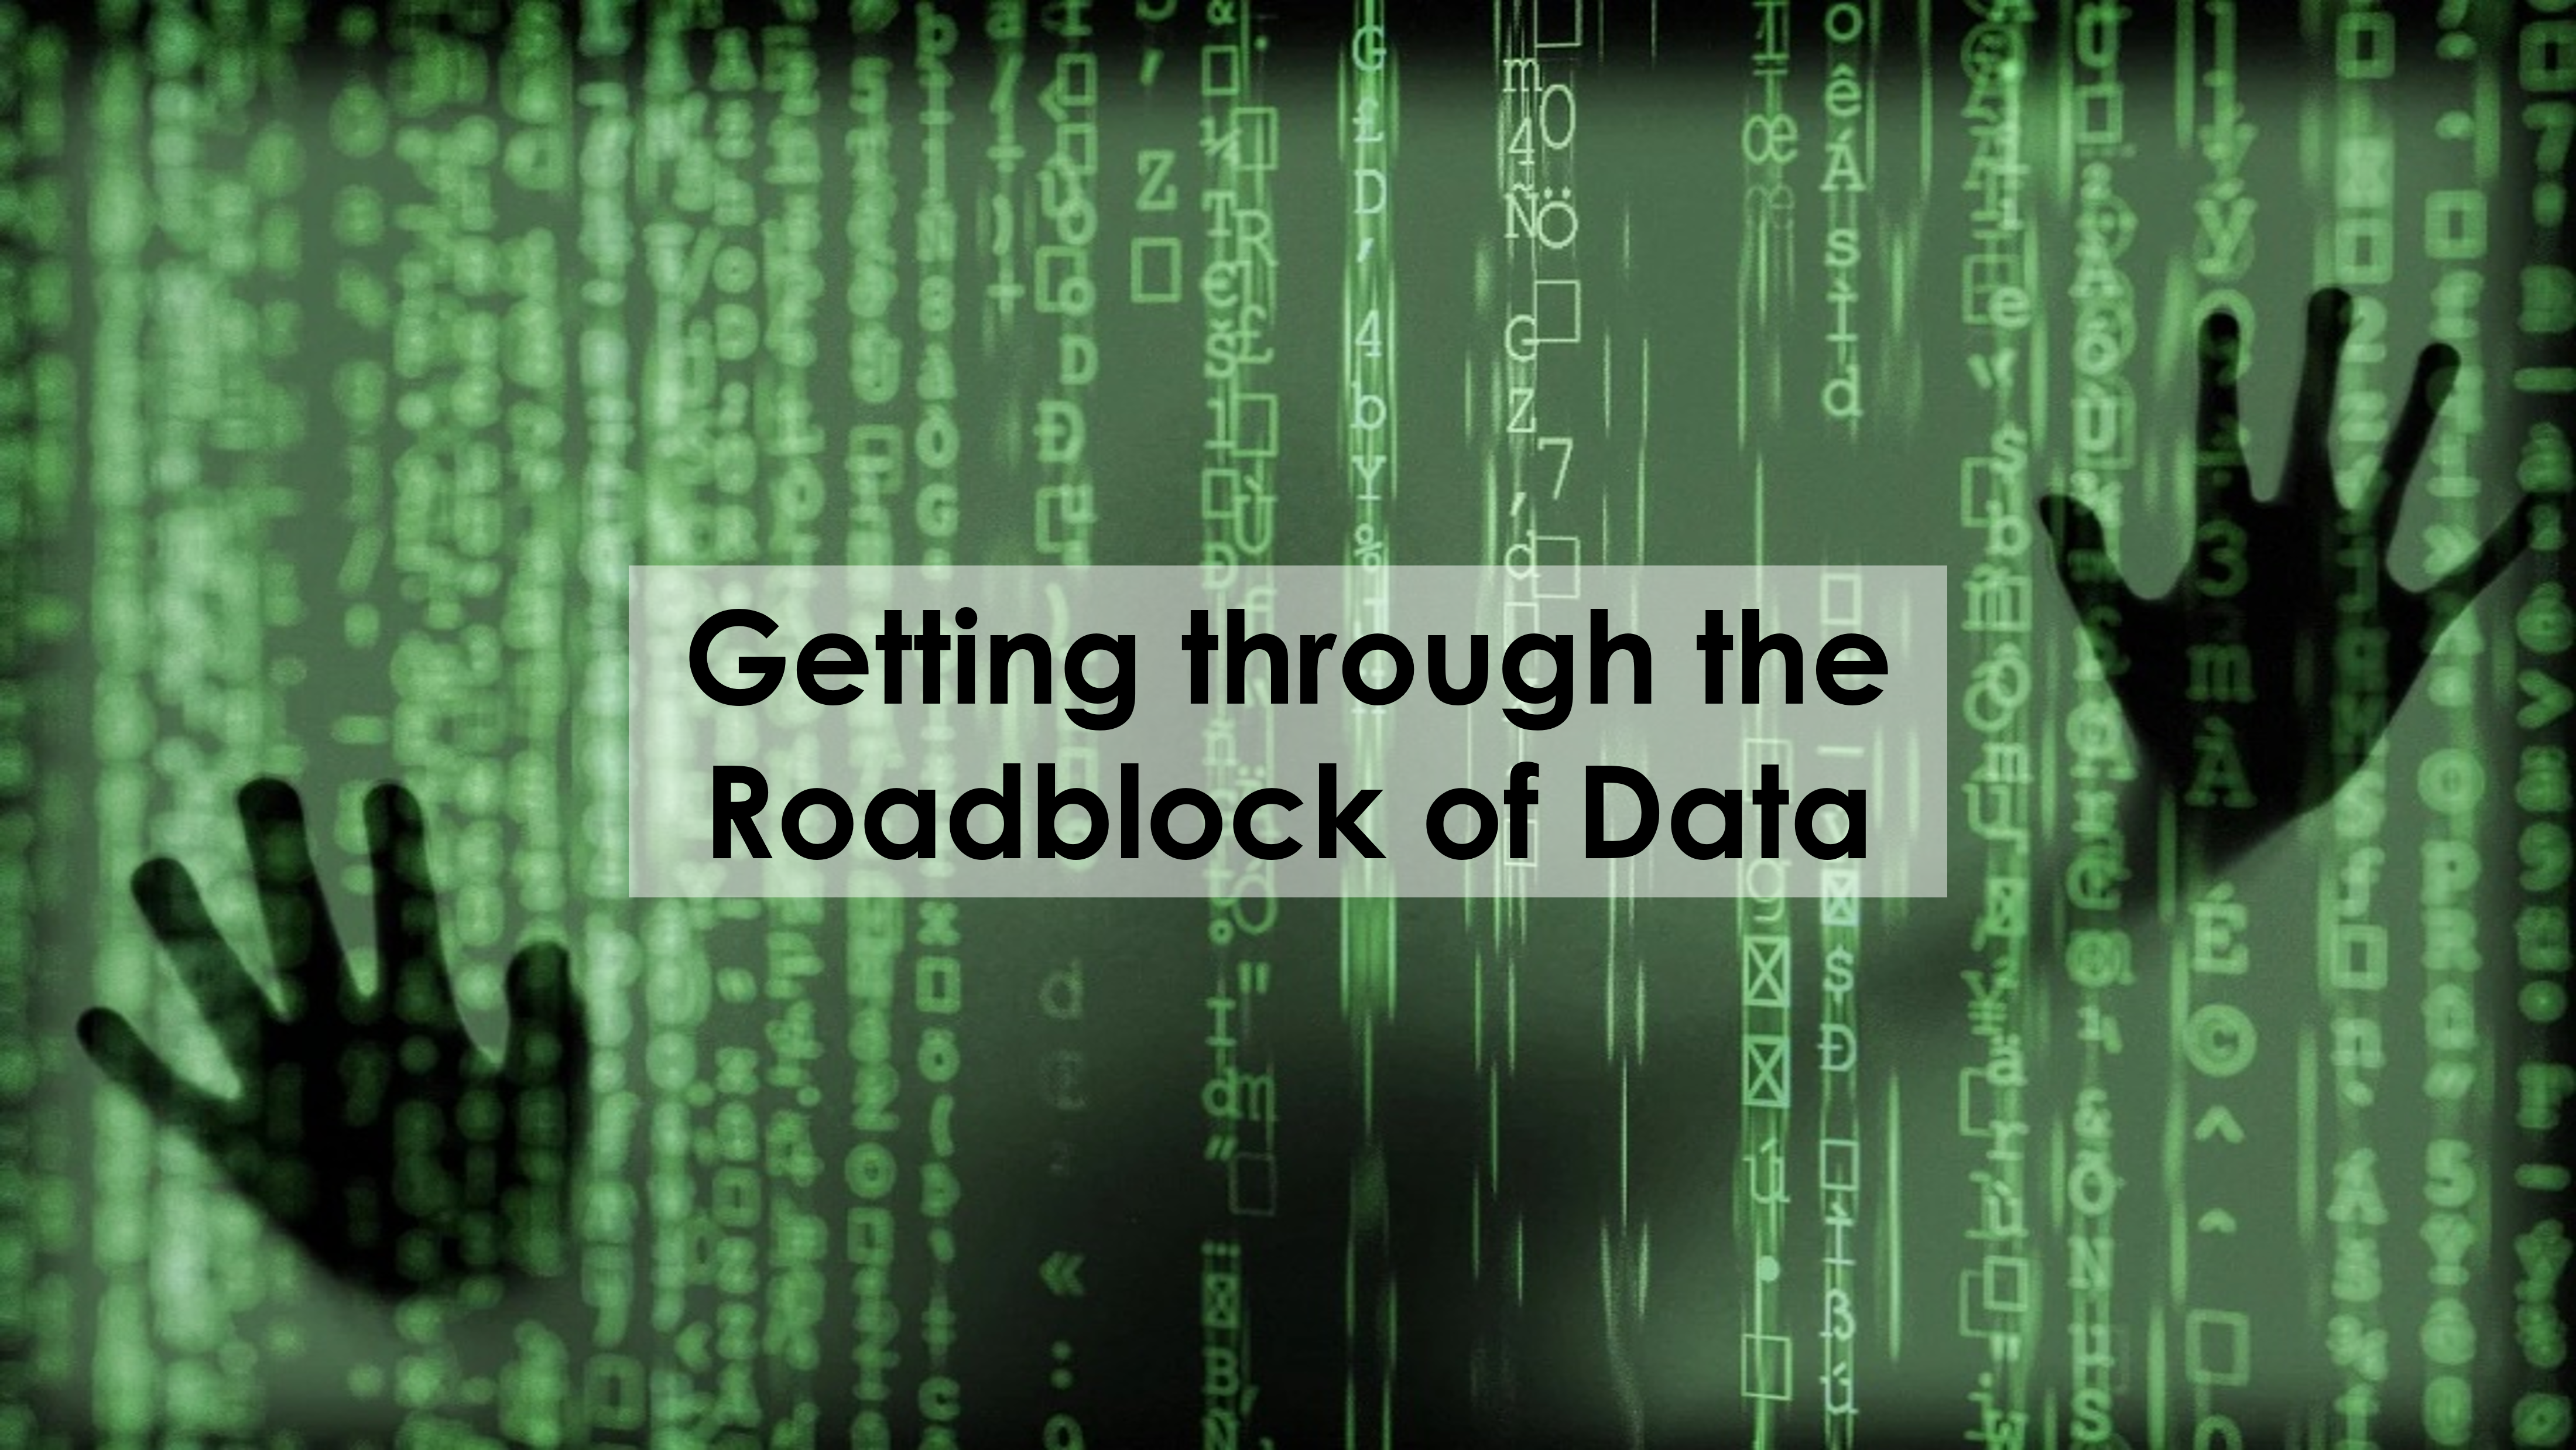 Getthing through the Roadblock of Data